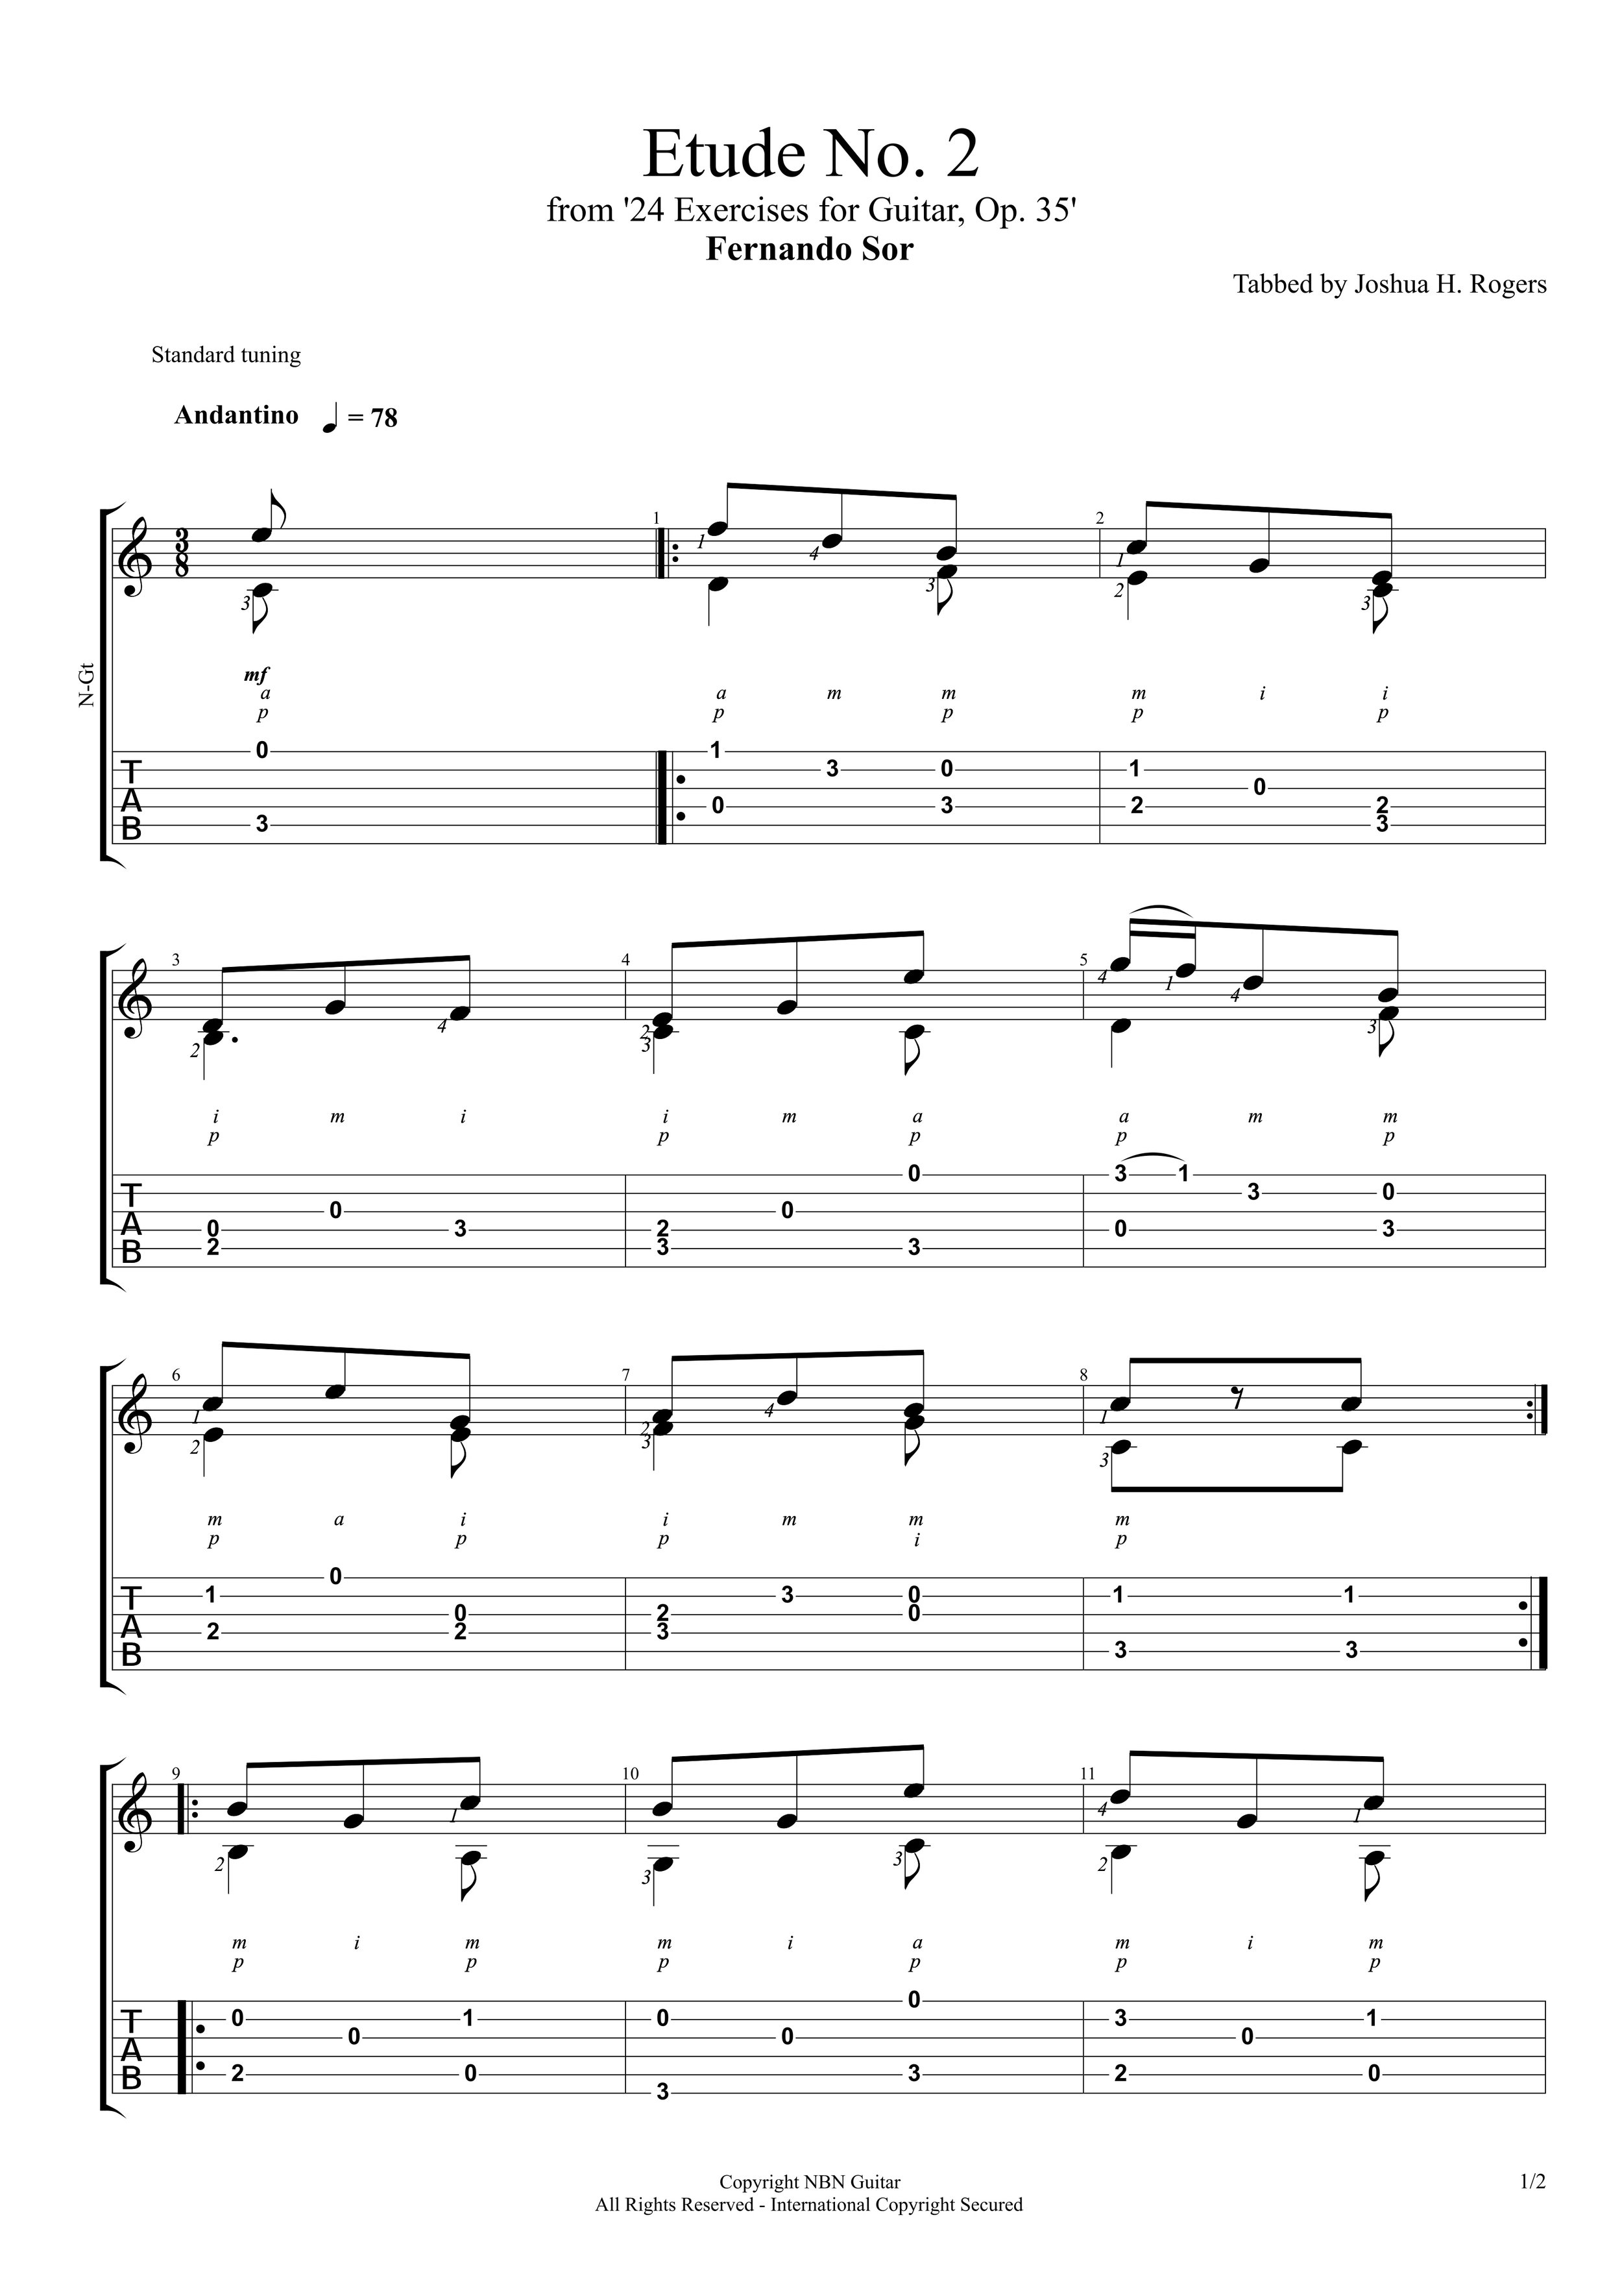 Etude No. 2, Op. 35 - Fernando Sor (Sheet Music & Tabs)-p3.jpg